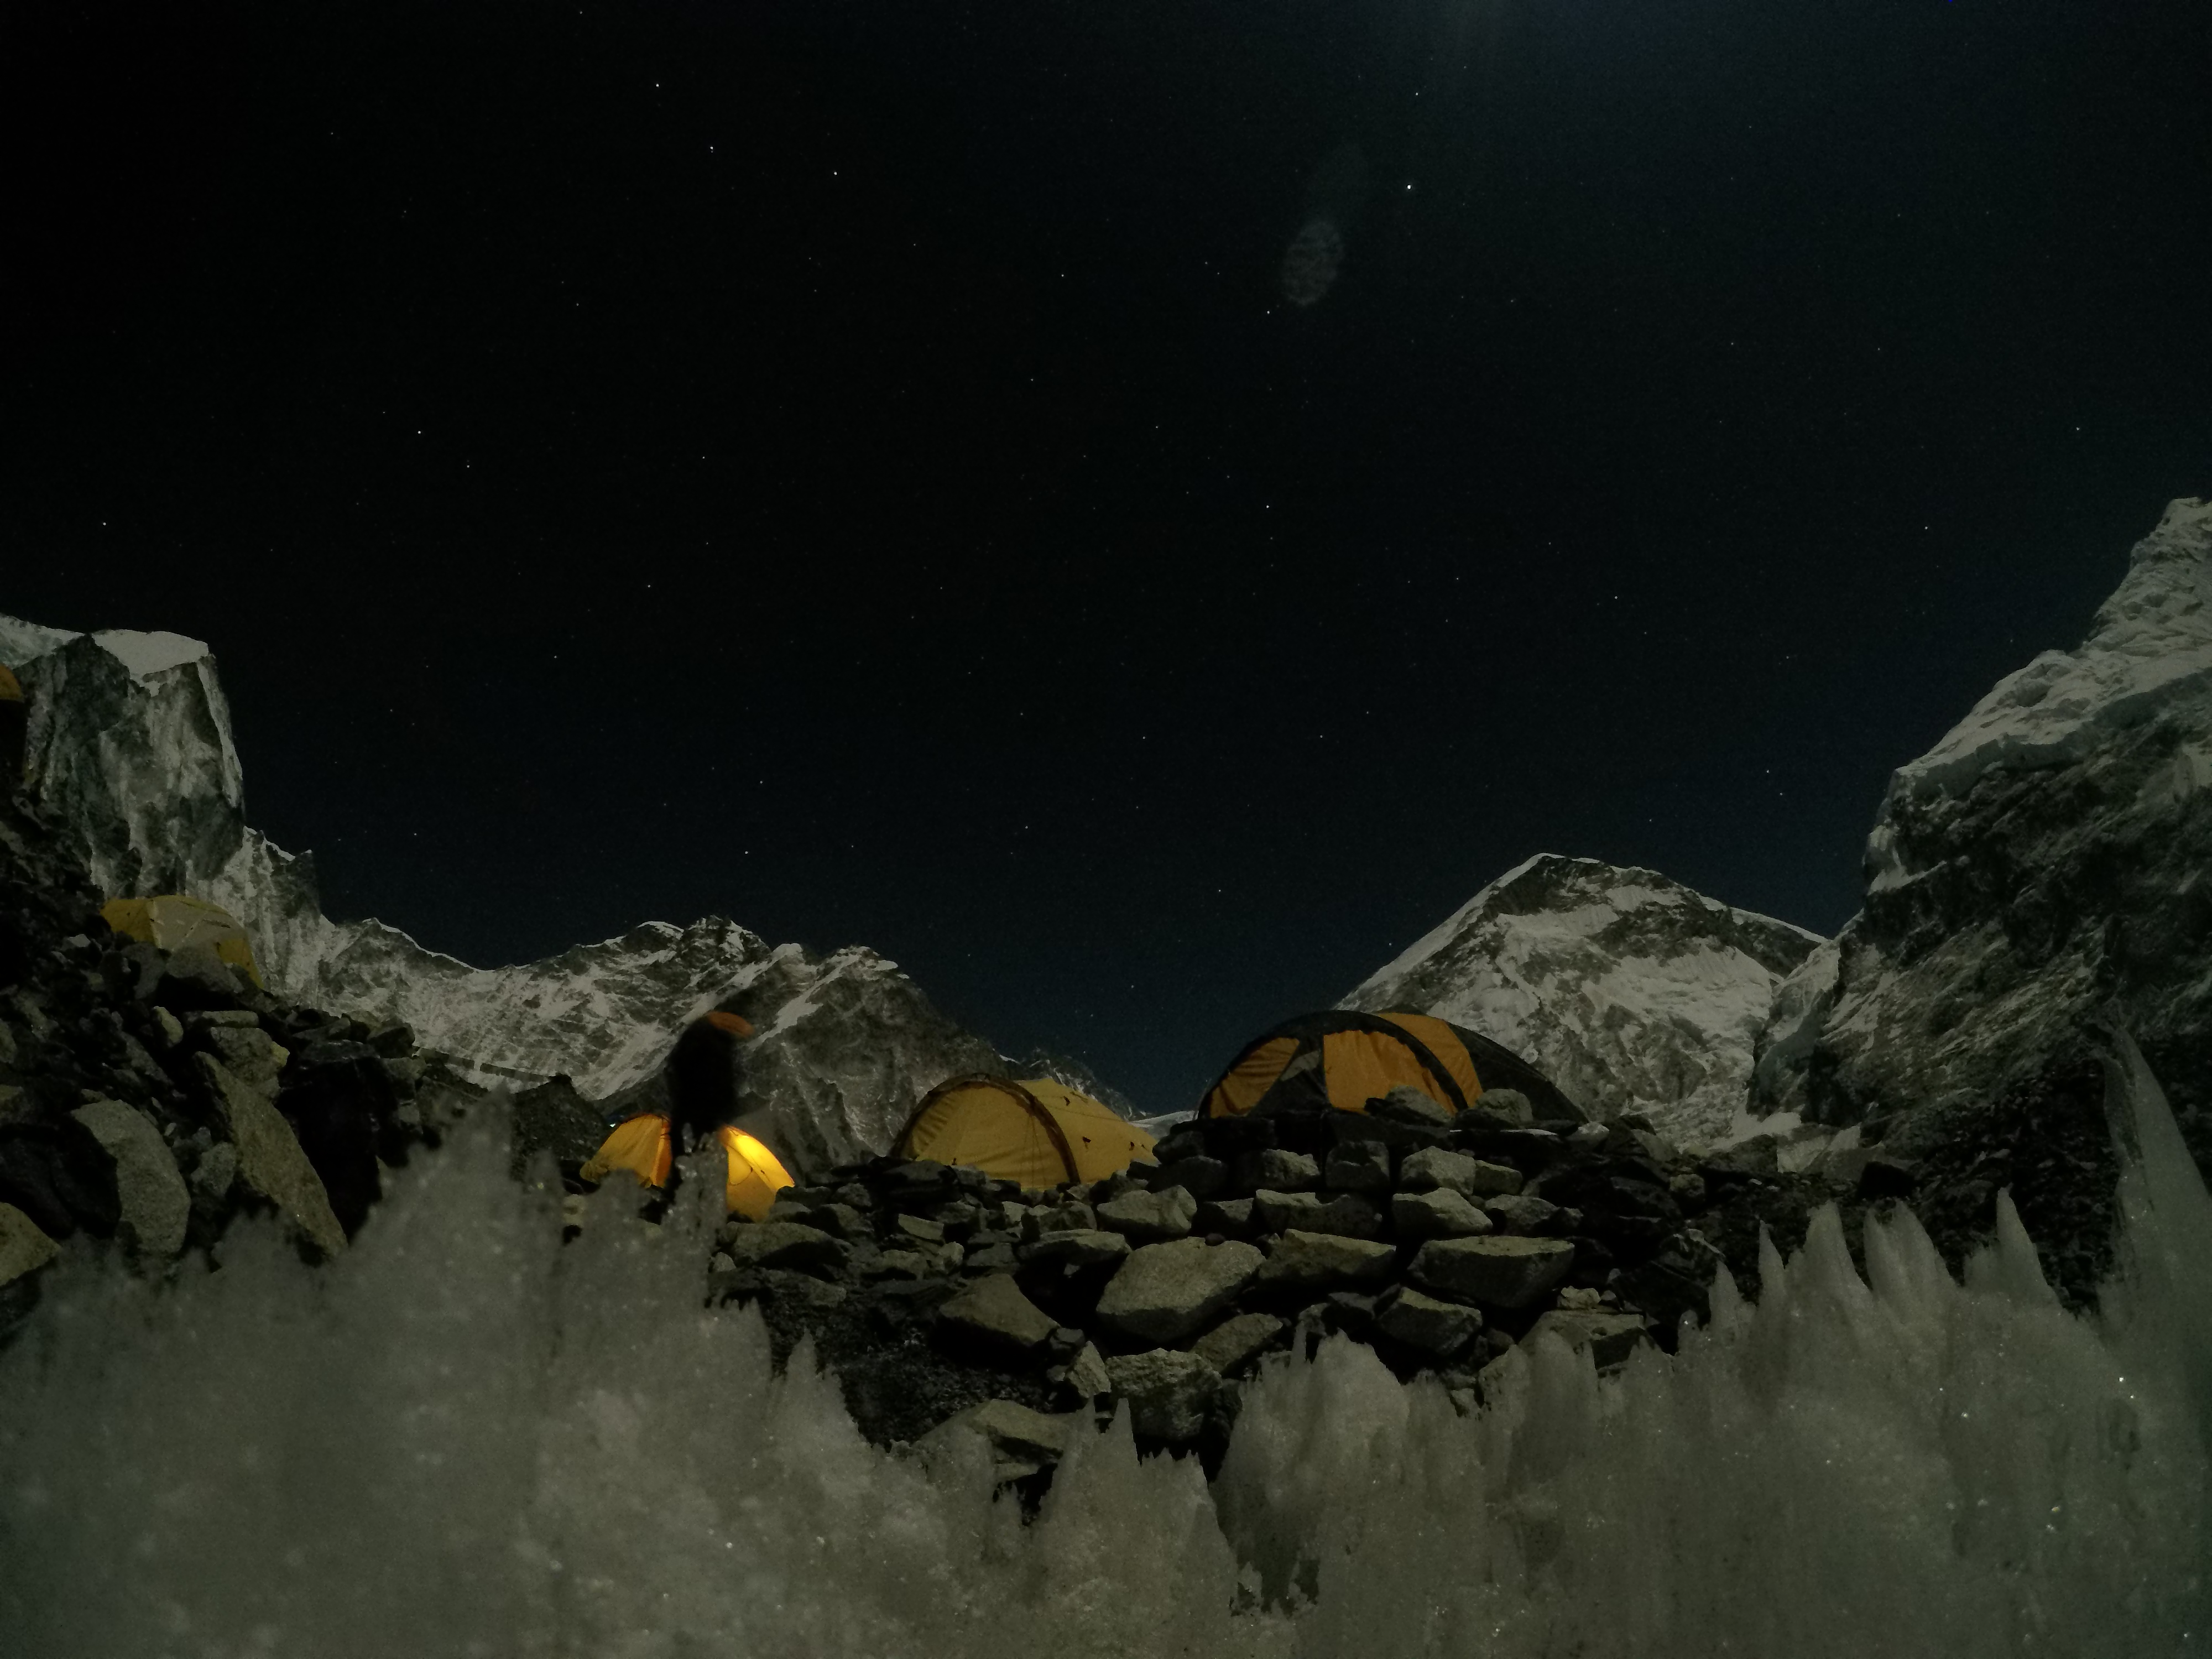 Everest 8,848m (South)